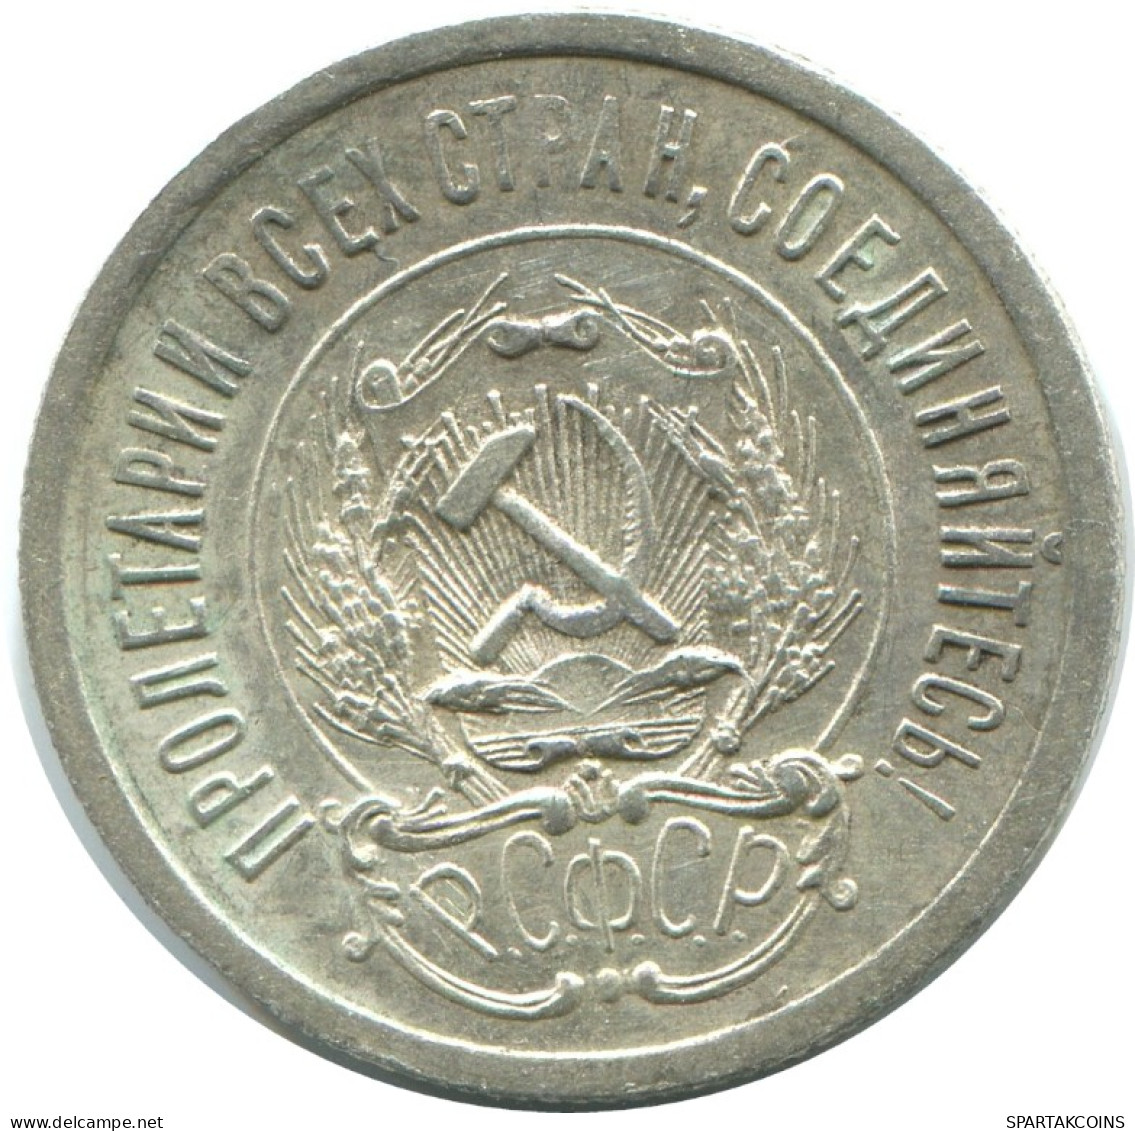 20 KOPEKS 1923 RUSIA RUSSIA RSFSR PLATA Moneda HIGH GRADE #AF435.4.E.A - Rusland